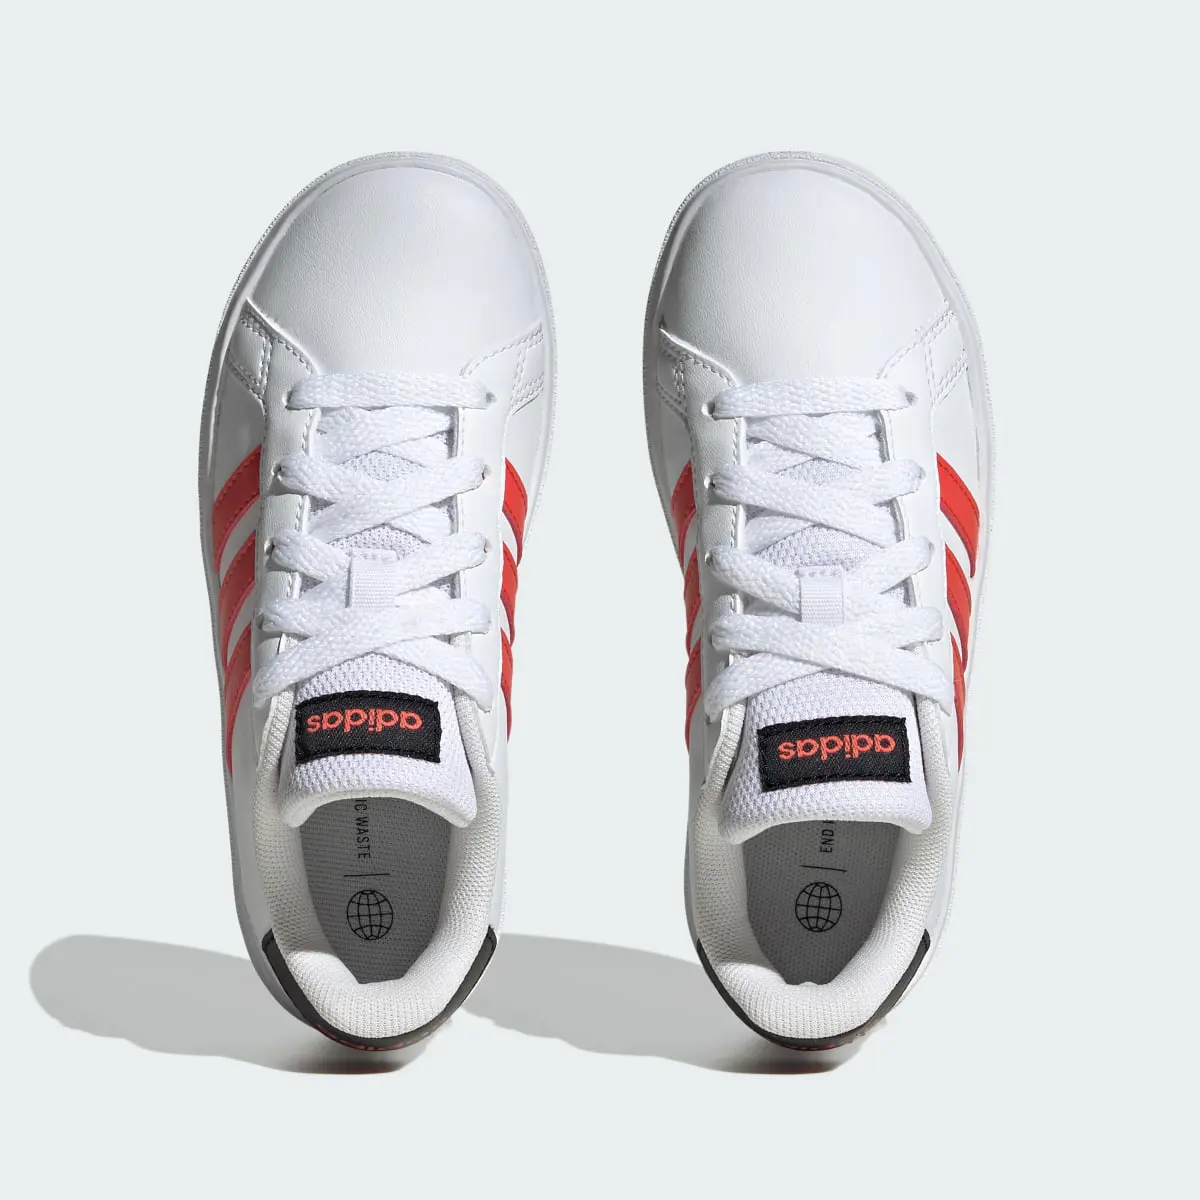 Adidas Scarpe da tennis Grand Court Lifestyle Lace-Up. 3